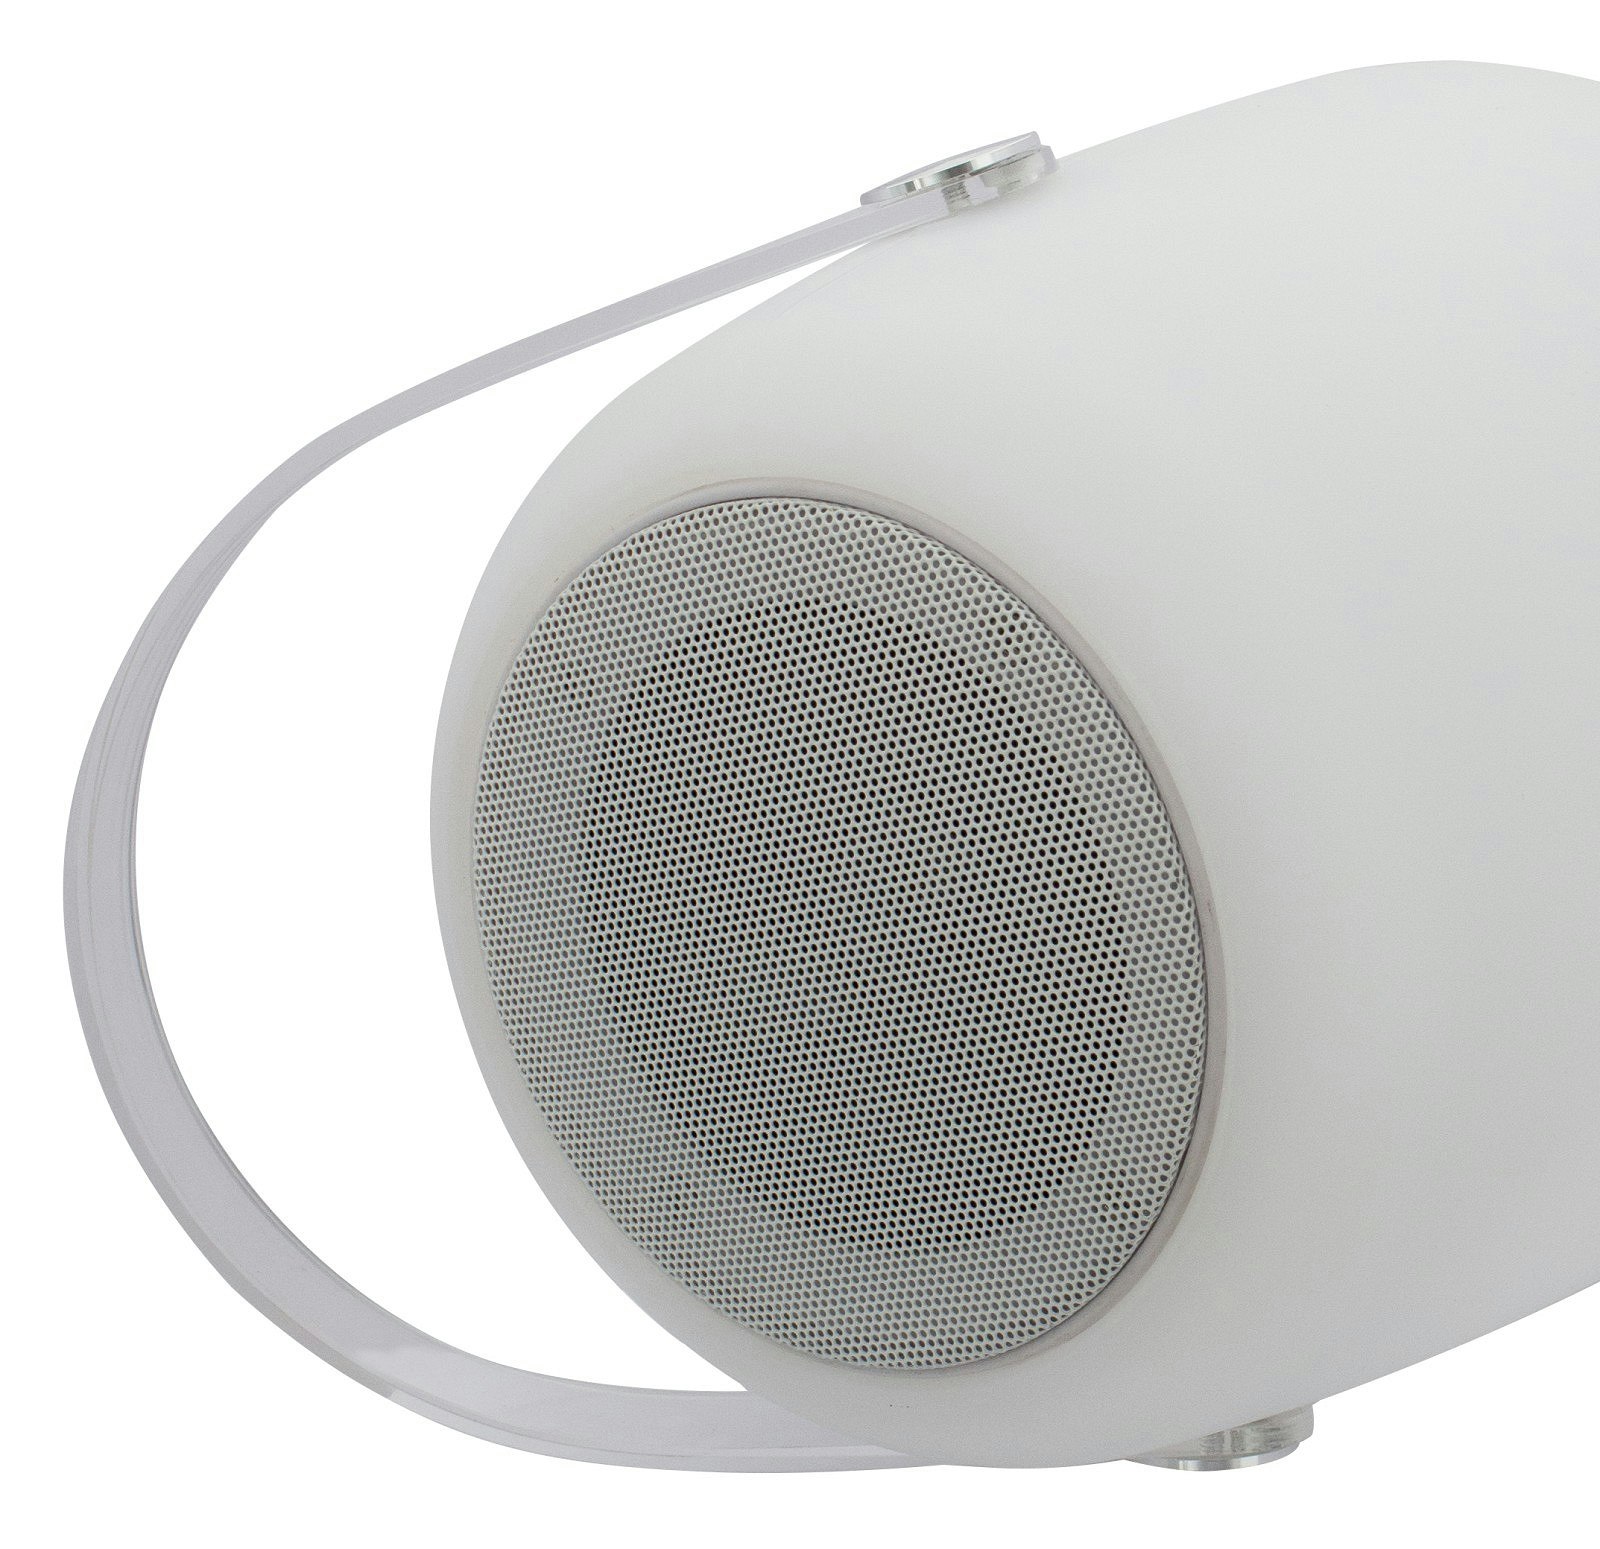 Bord/loungelampe m/Bluetooth høyttaler